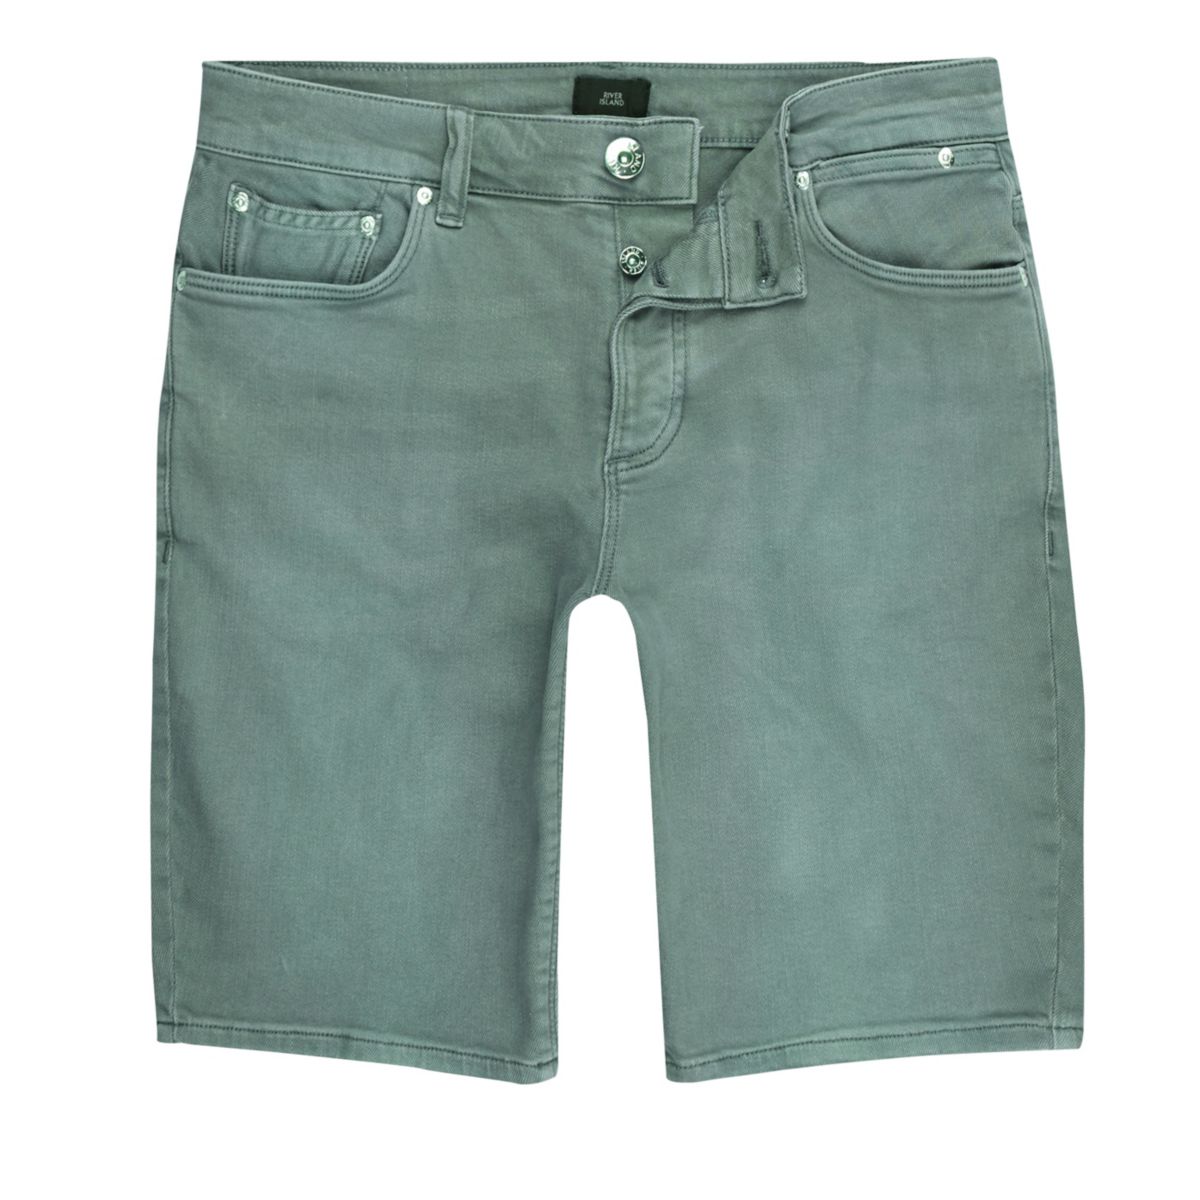 green denim jeans for mens shorts